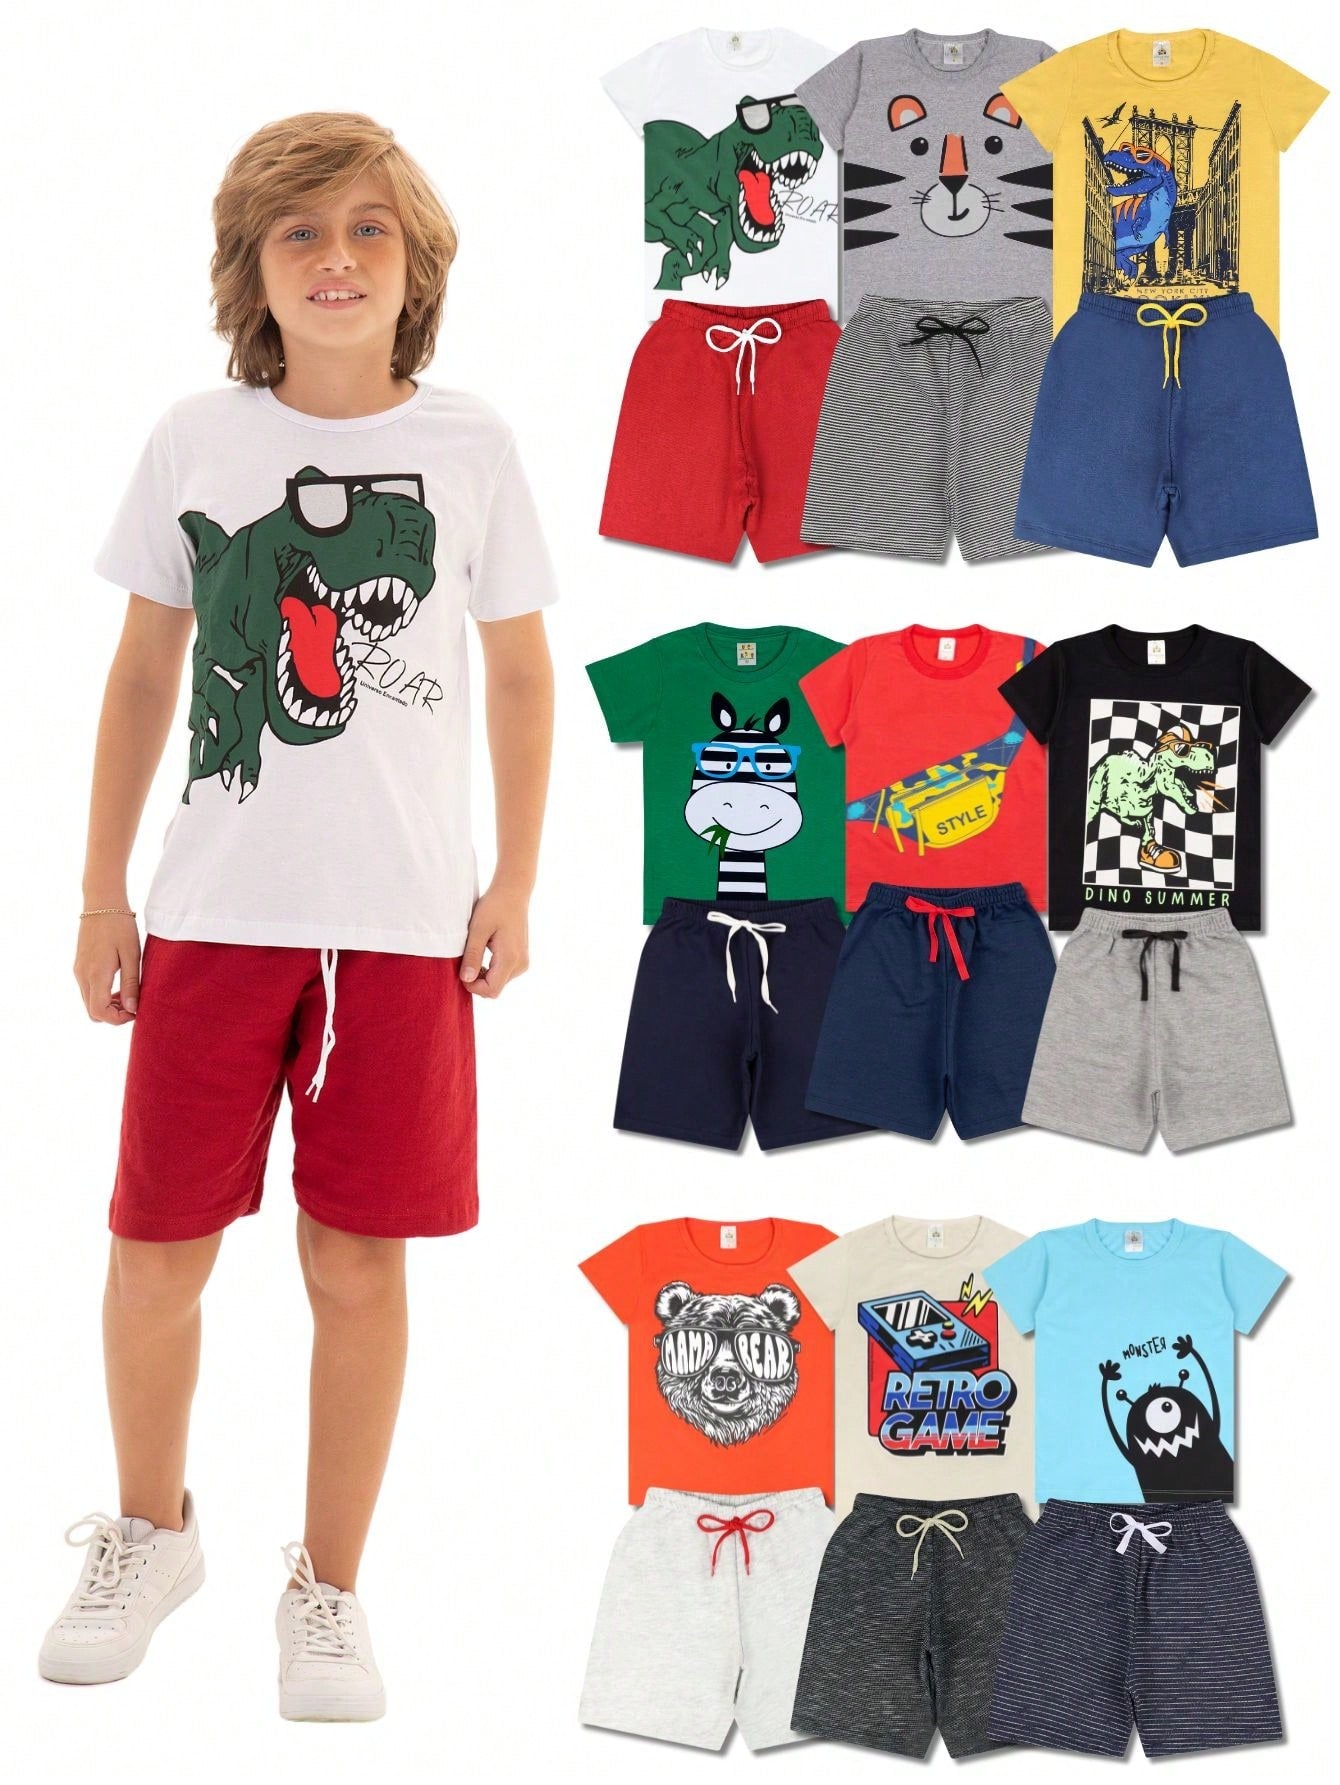 Roupas Infantil Menino - Kit Sortido 10 Peças (5 conjuntos)- 5 Camisetas + 5 Bermudas